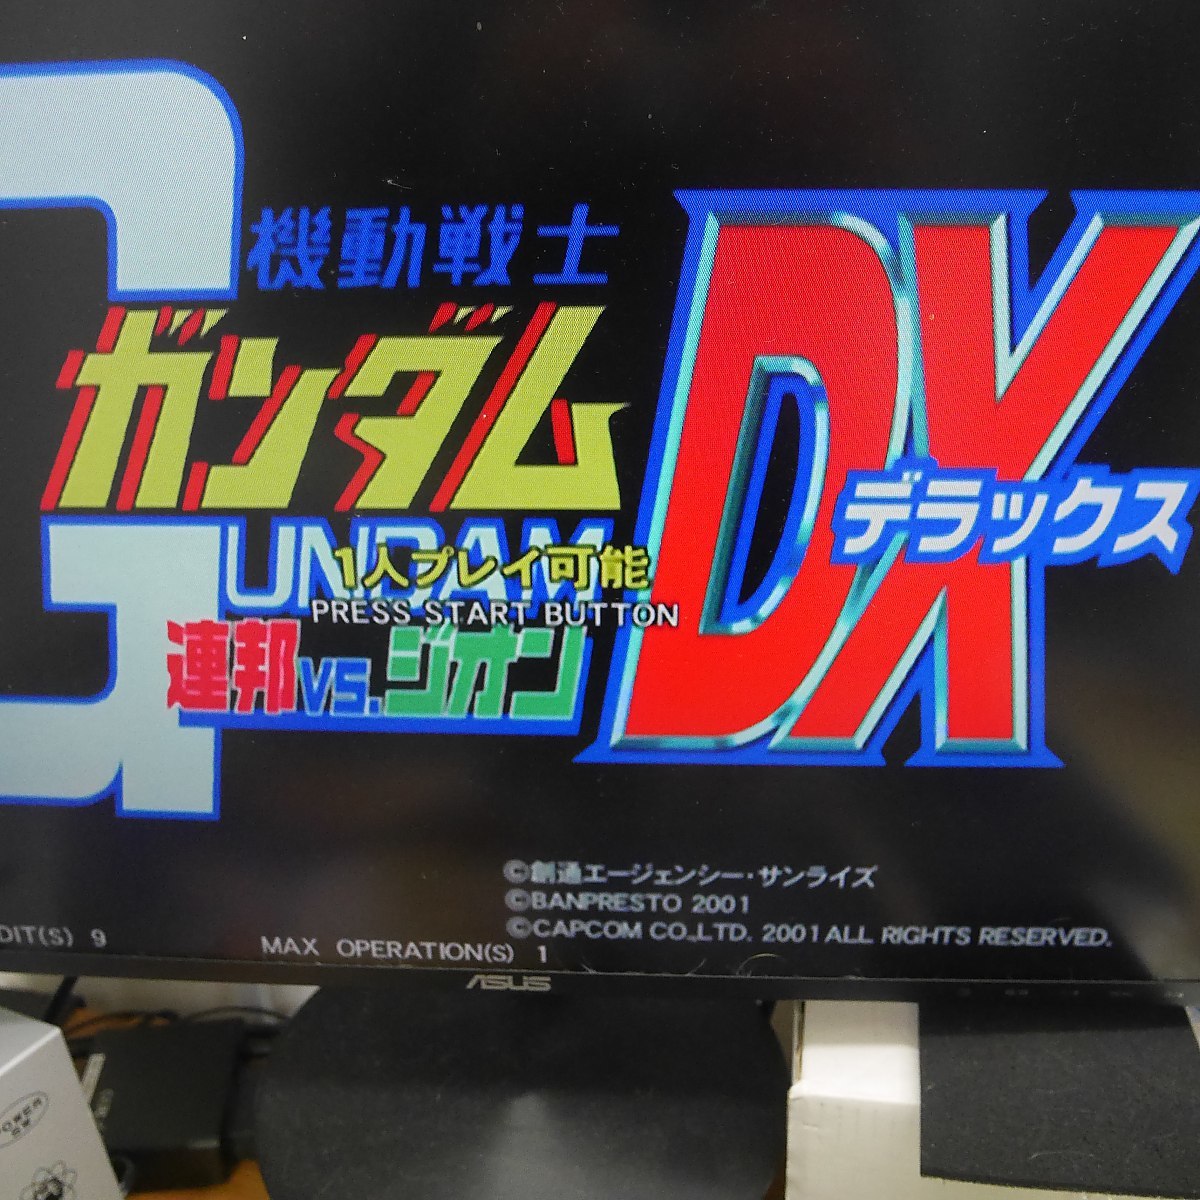 Mobile Suit Gundam: Federation vs Zeon DX NAOMI GD-ROM Disk, KEY chip set-f0509